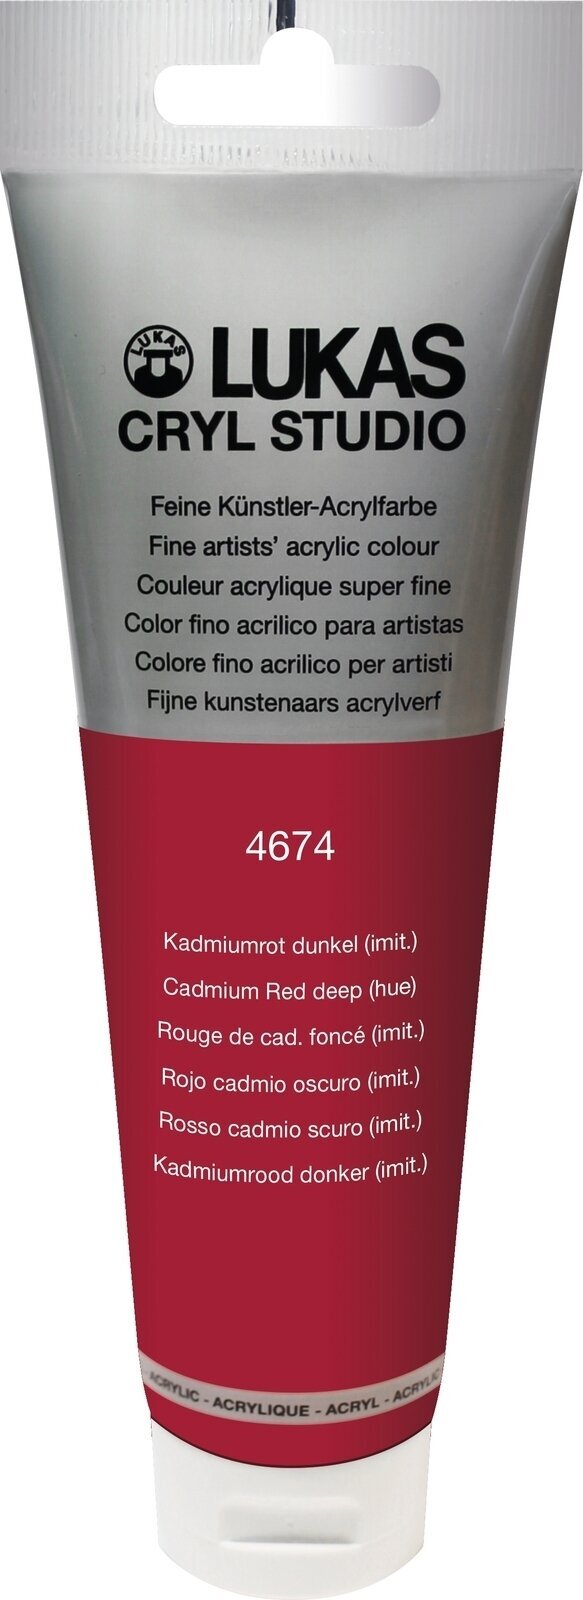 Farba akrylowa Lukas Cryl Studio Acrylic Paint Plastic Tube Farba akrylowa Cadmium Red Deep Hue 125 ml 1 szt